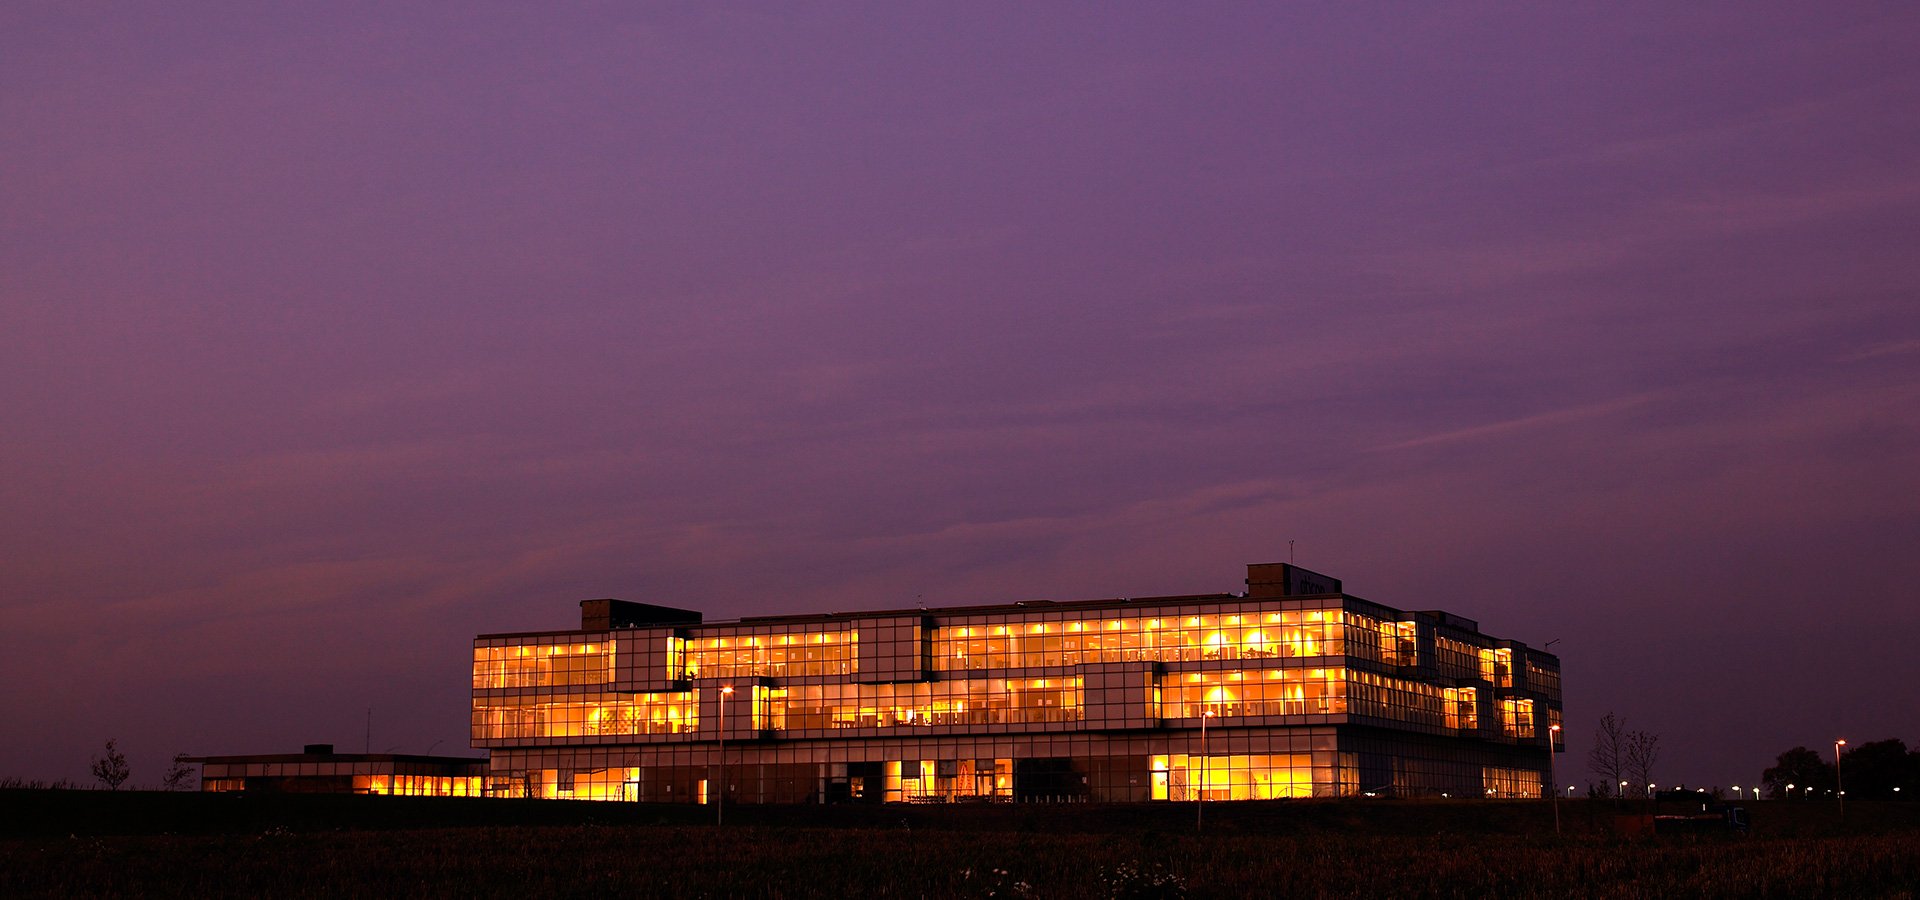 Oticon Denmark global headquarters building at night